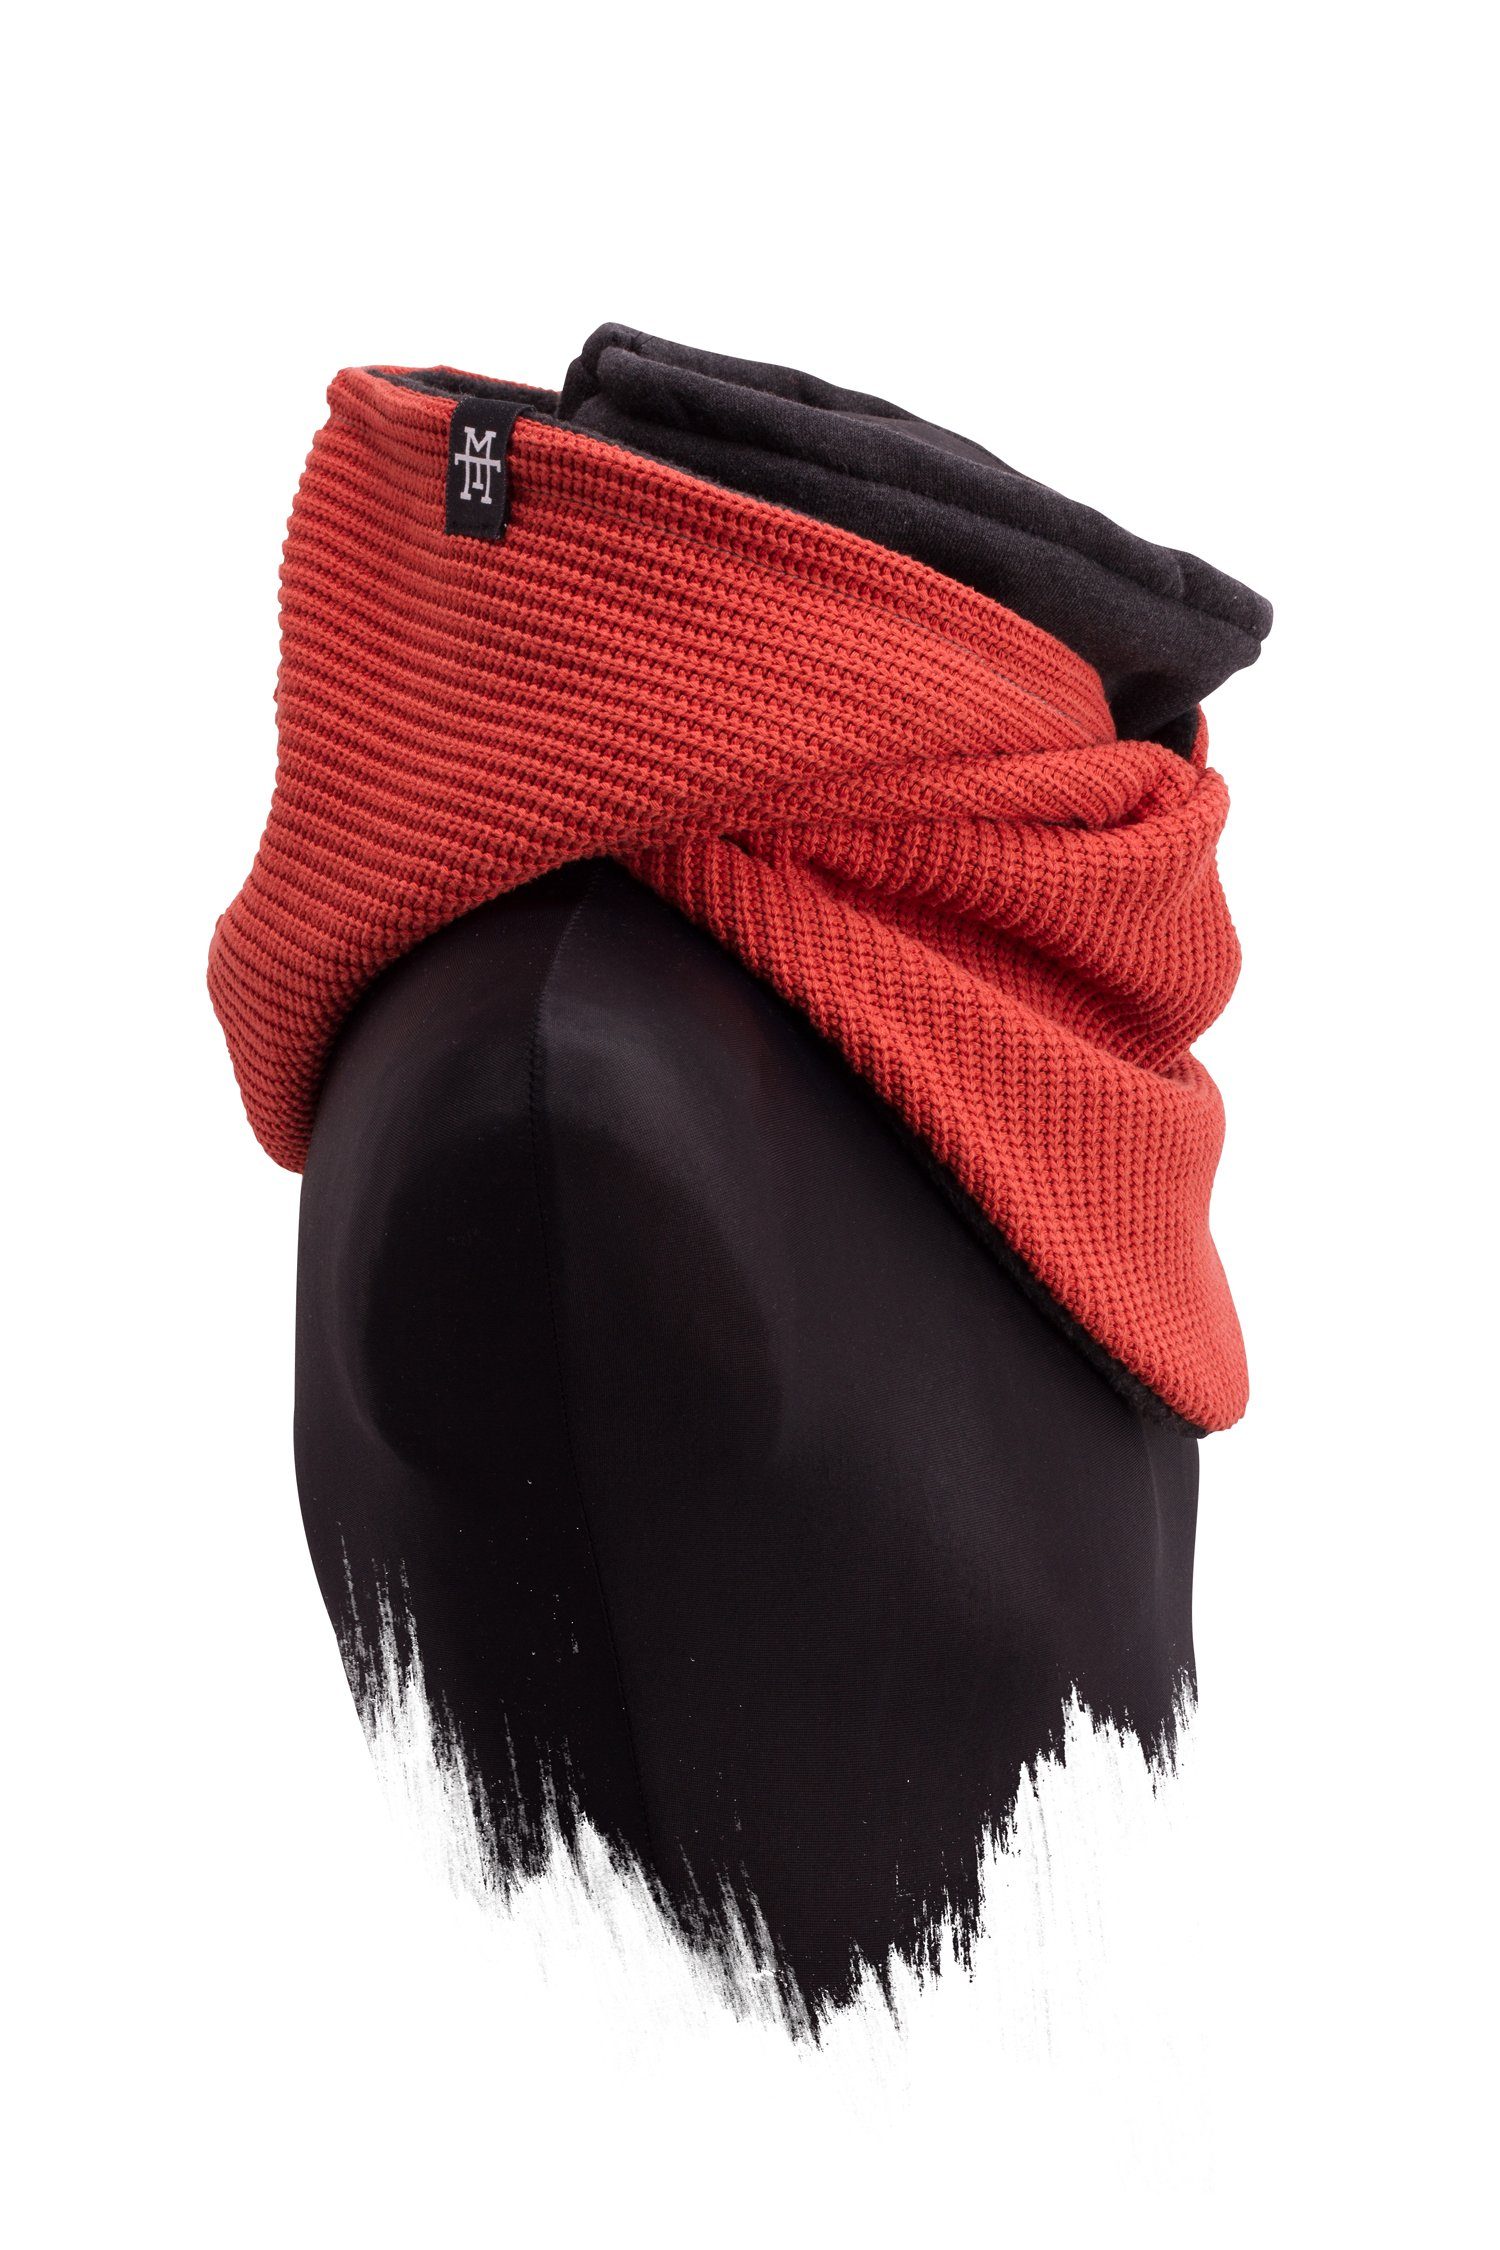 Kapuzenschal, integriertem Windbreaker Schal, mit Hooded Modeschal Knit - Cognac Strickschal, Loop Manufaktur13